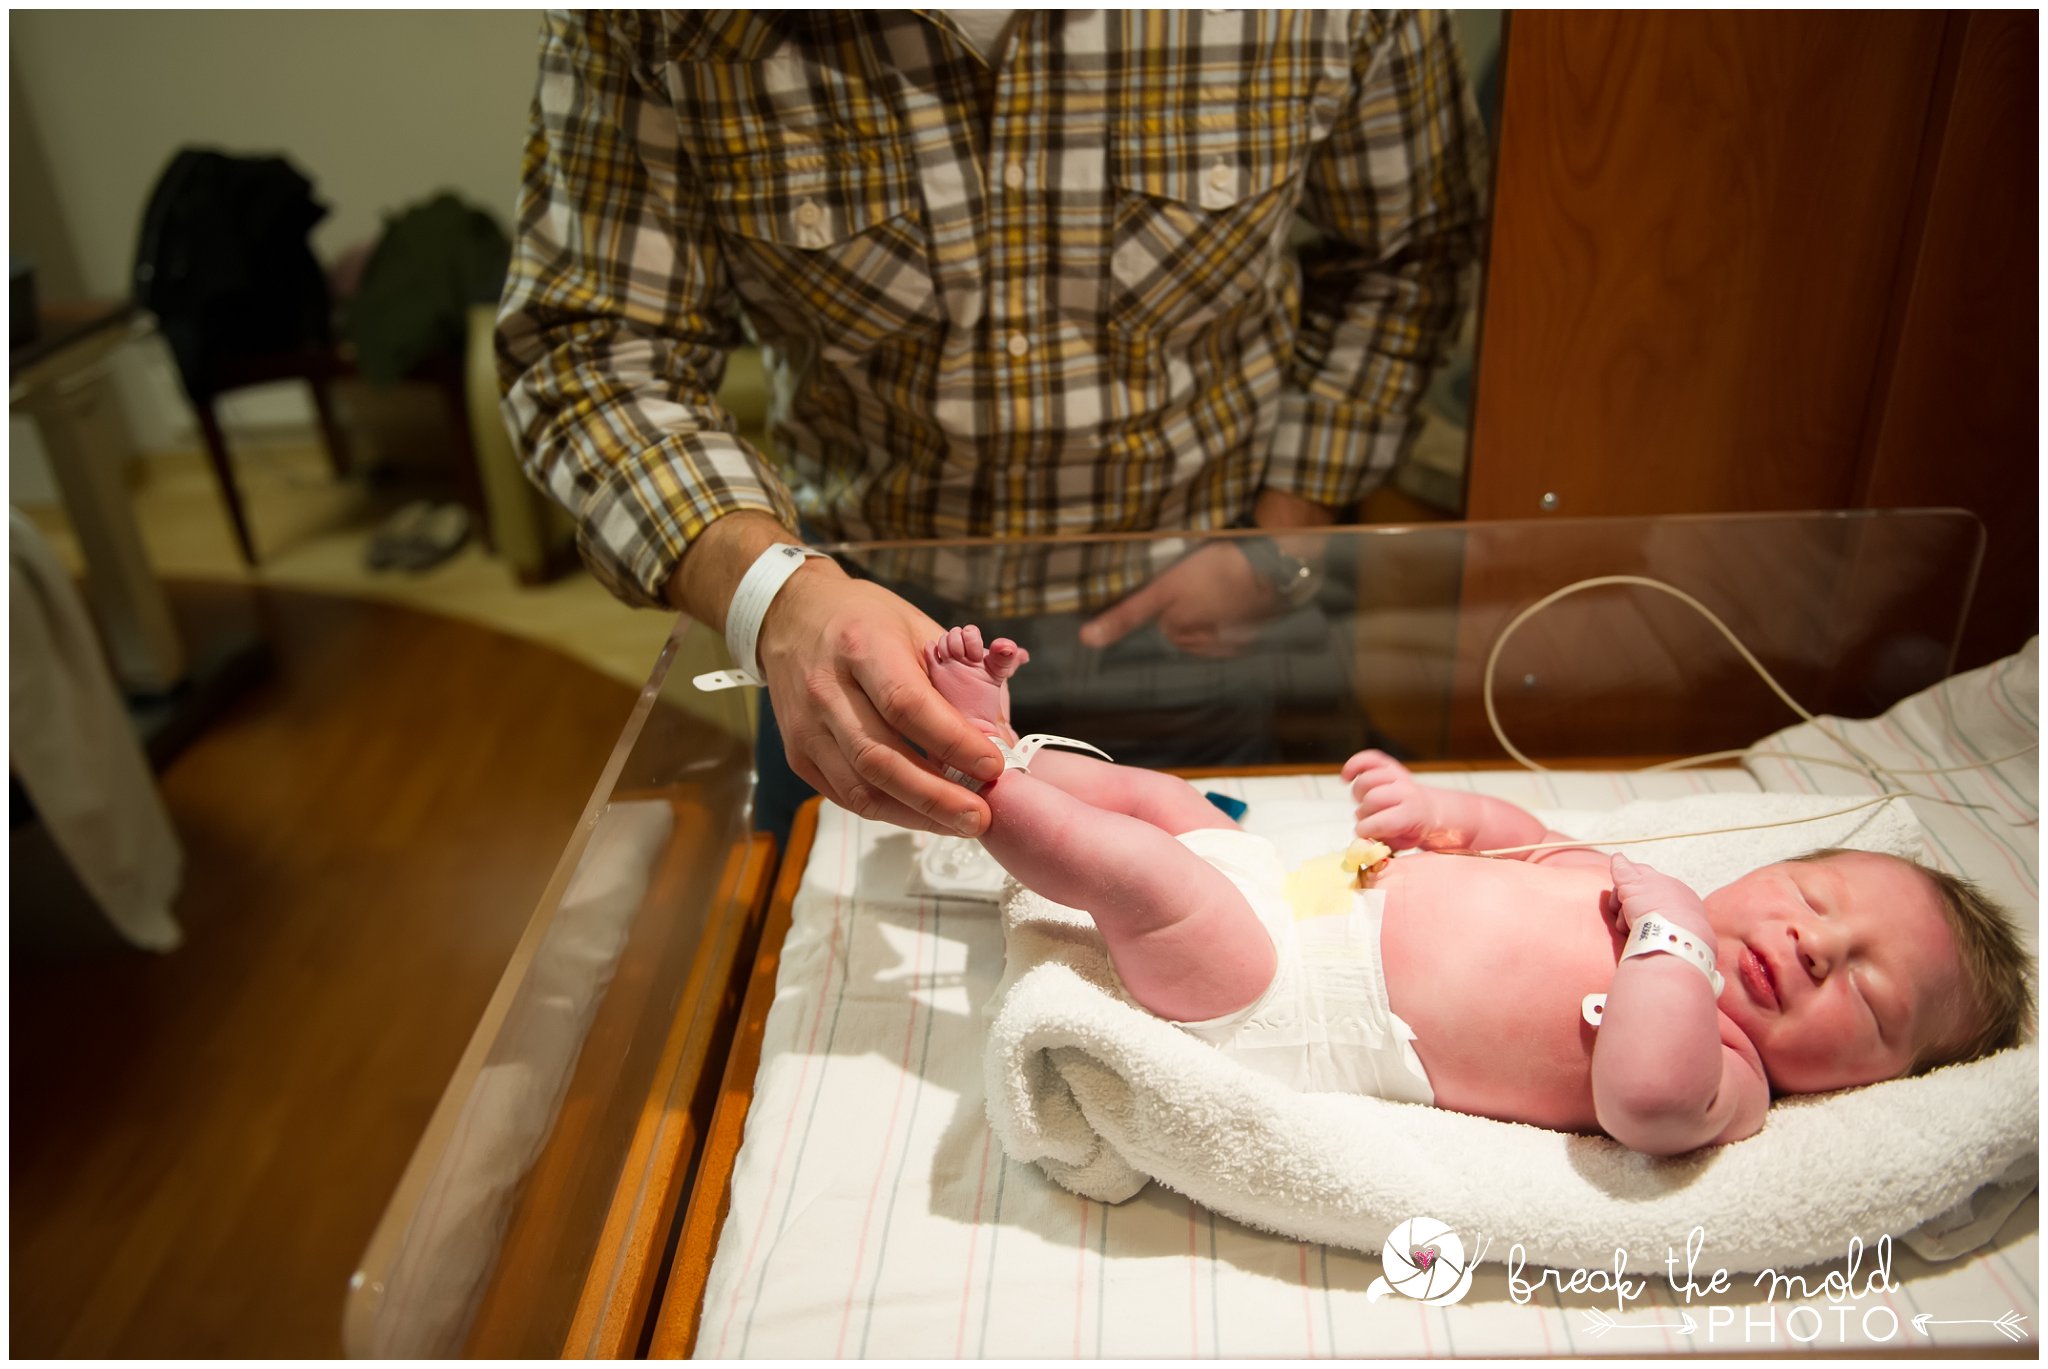 fresh-24-newborn-in-hospital-break-the-mold-photo-baby-girl-sweet-in-room-photos (9).jpg